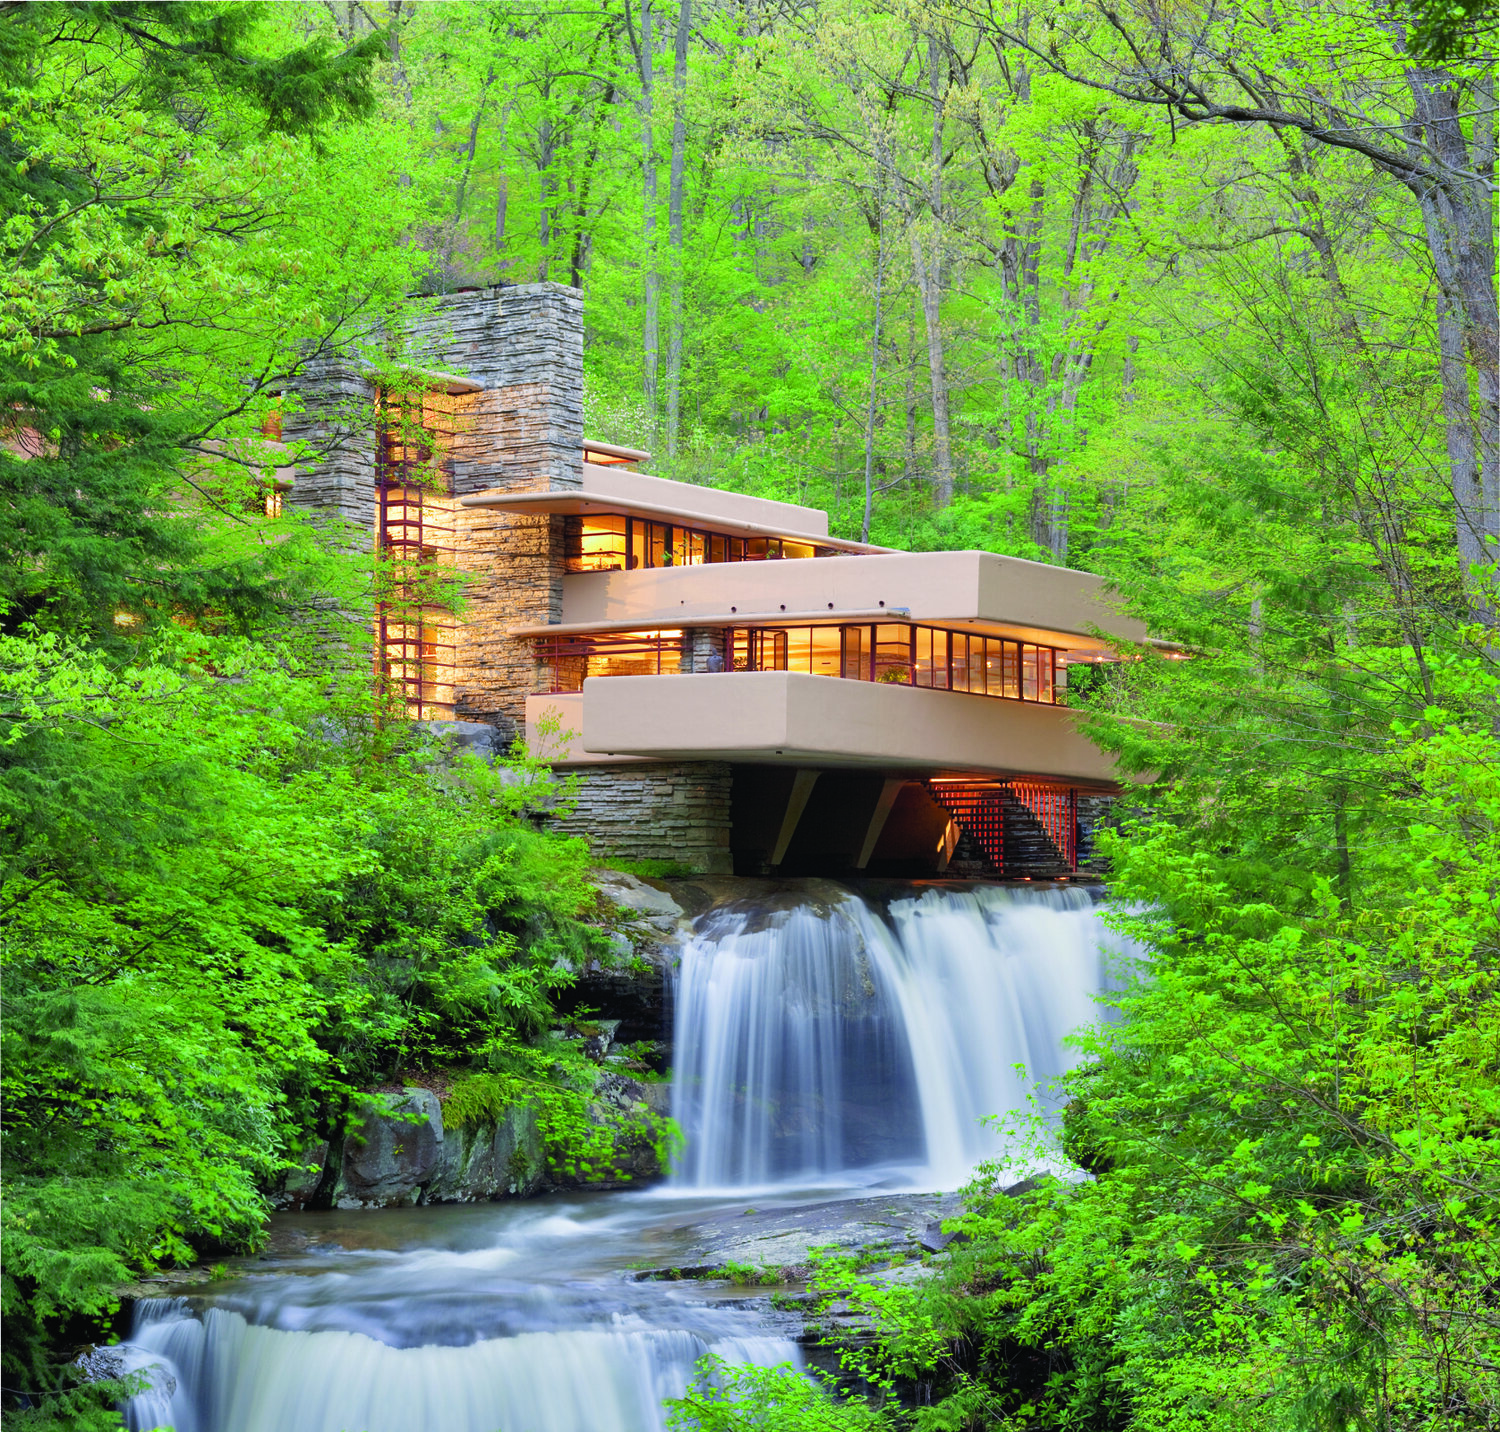 Fallingwater, the masterwork of renowned American architect Frank Lloyd Wright